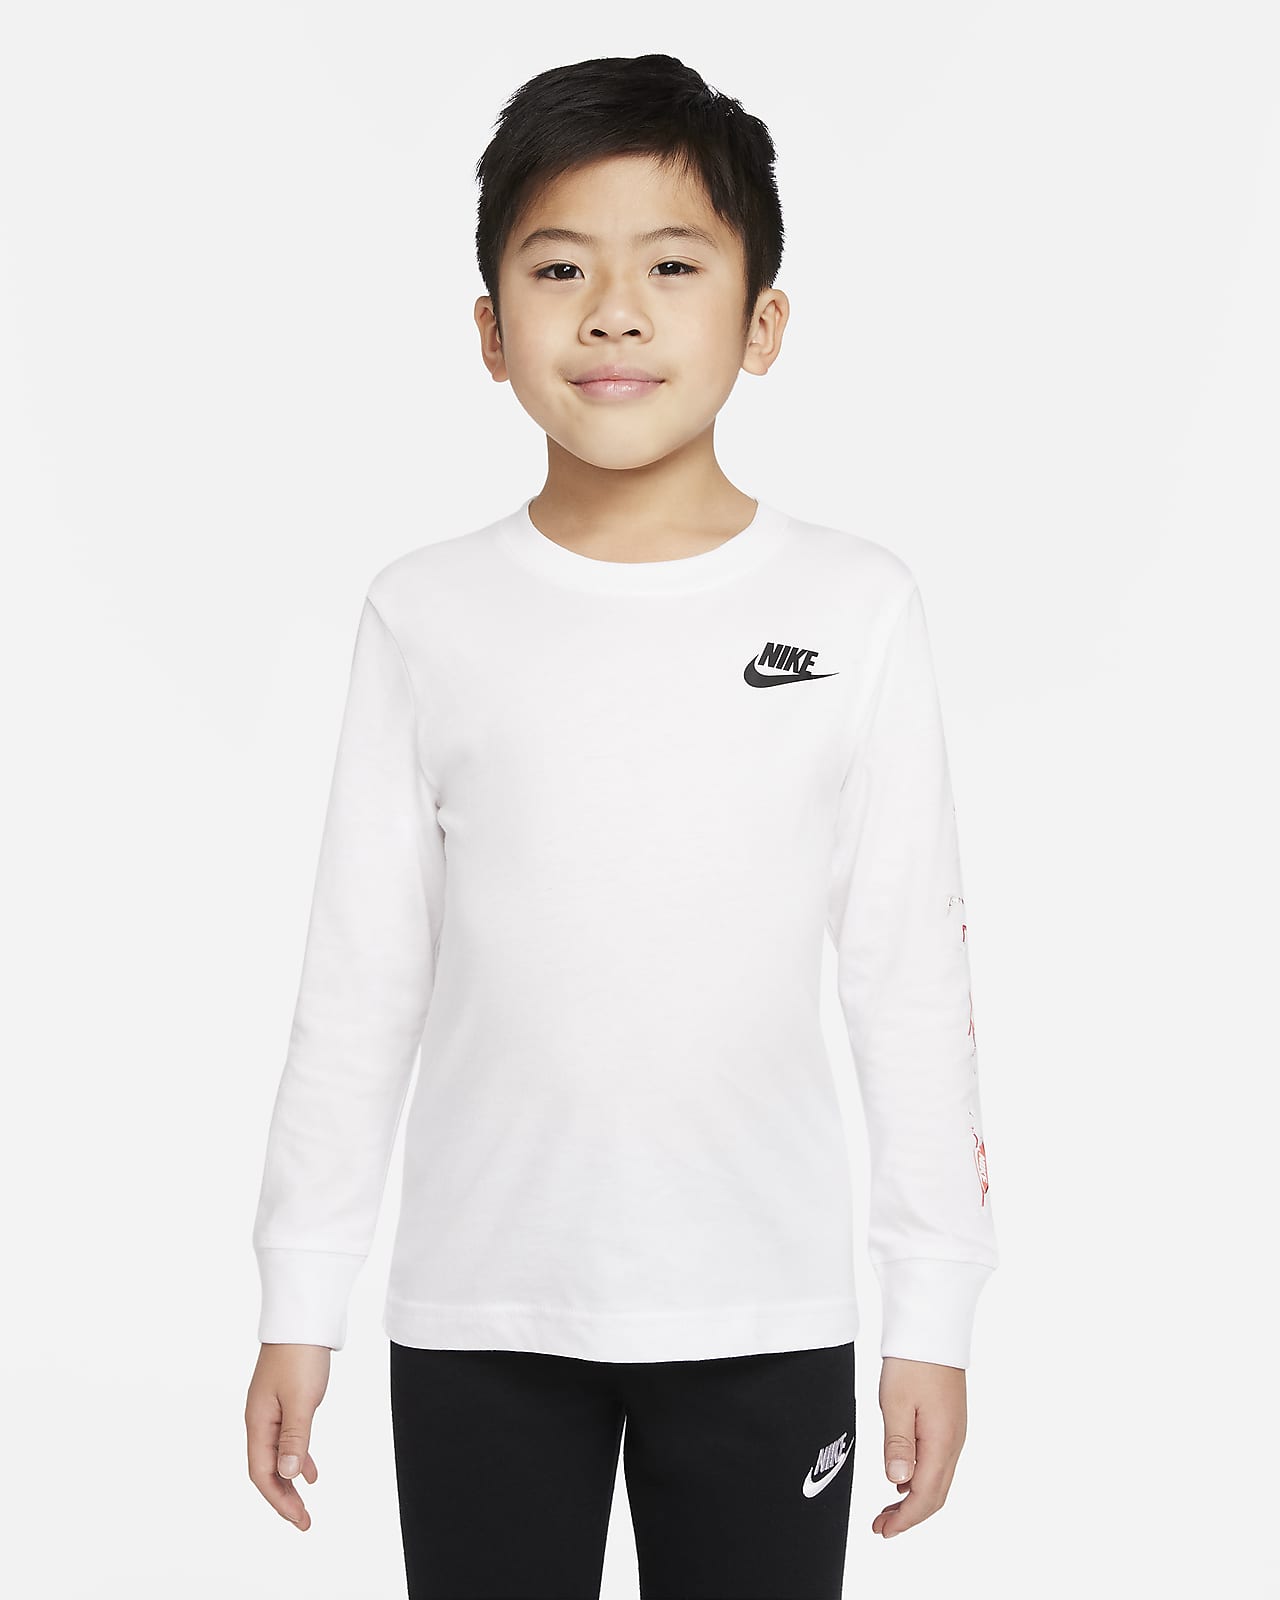 Nike Full-Button Up Baseball V Neck Short Sleeve T-Shirt Jersey (Youth) White- Boys- Size XL